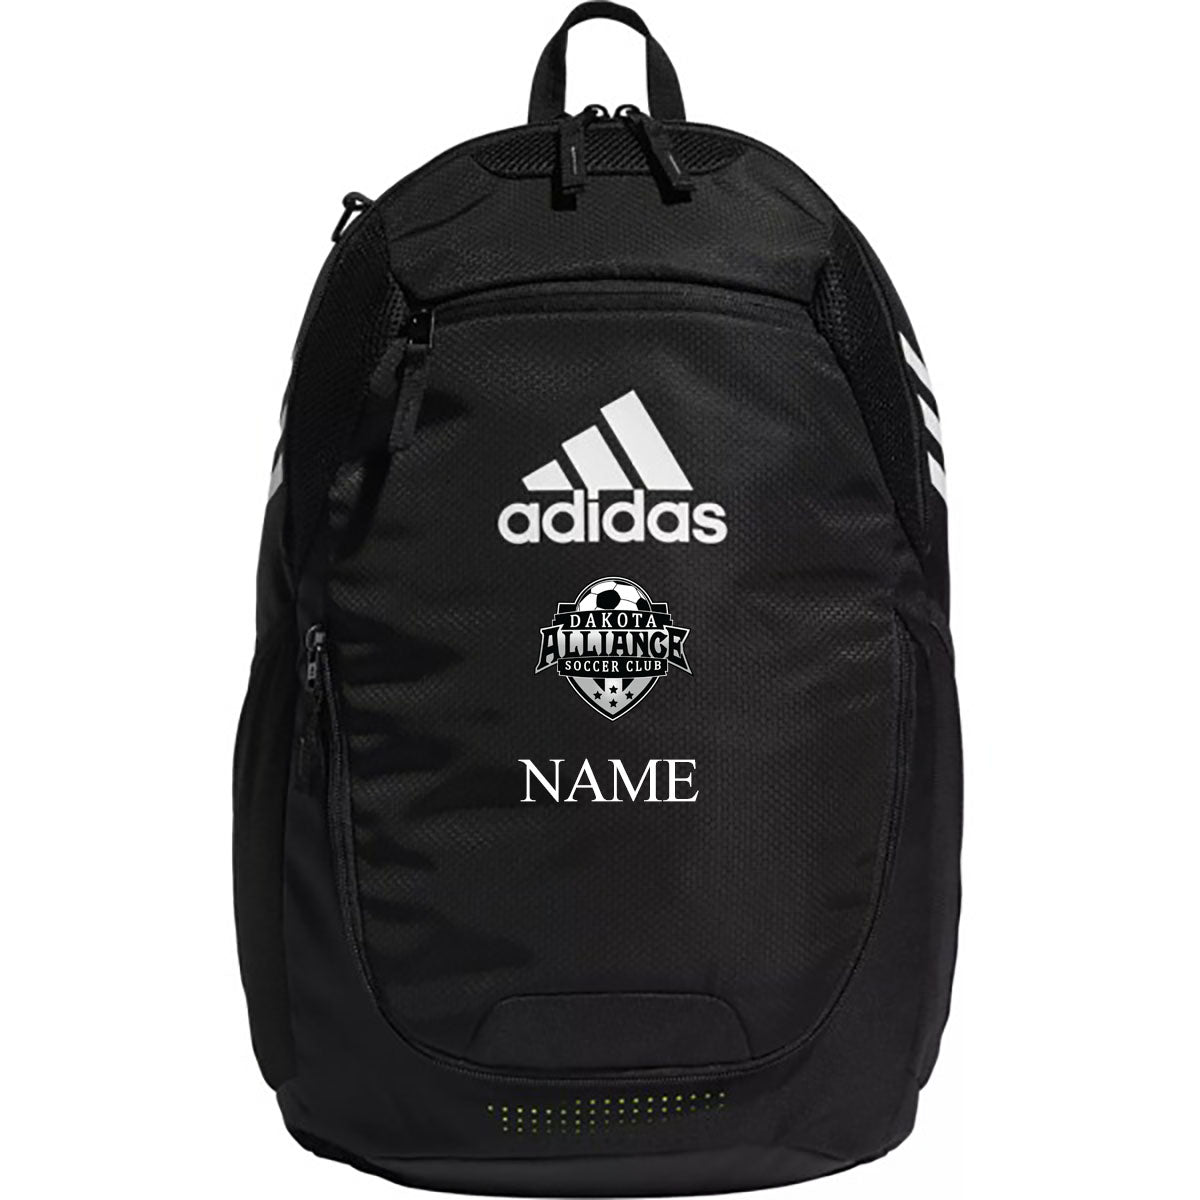 DASC Stadium III Backpack Bags Adidas Black 